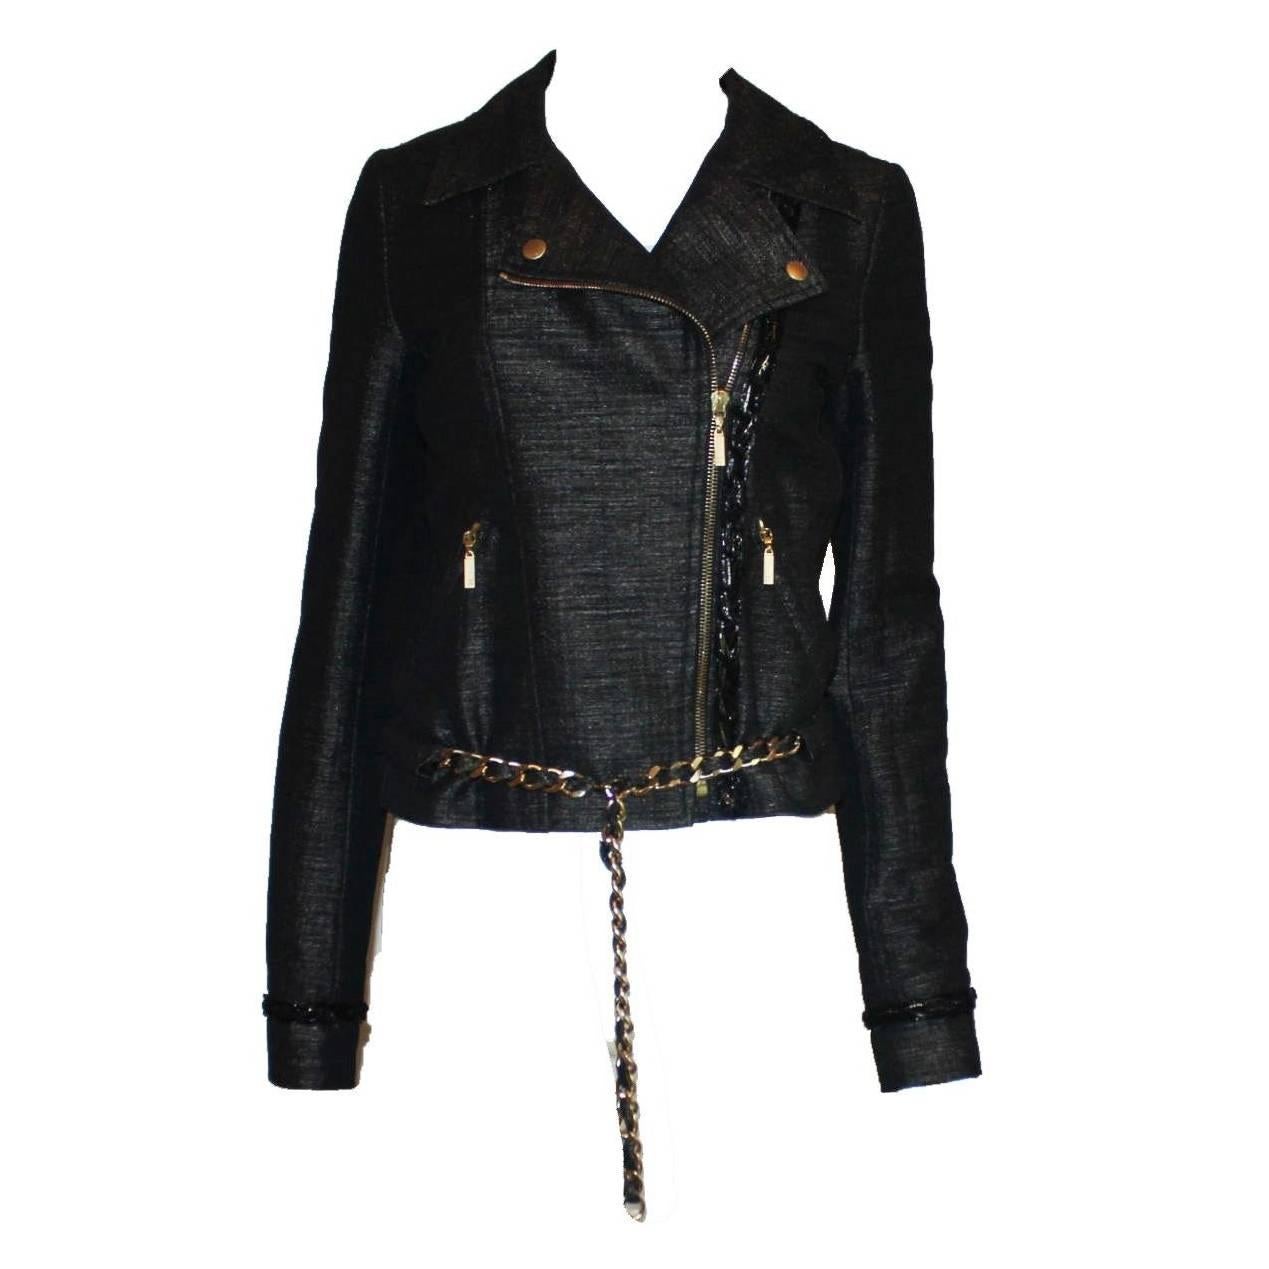 Chanel Metallic Chain Detail Jacket